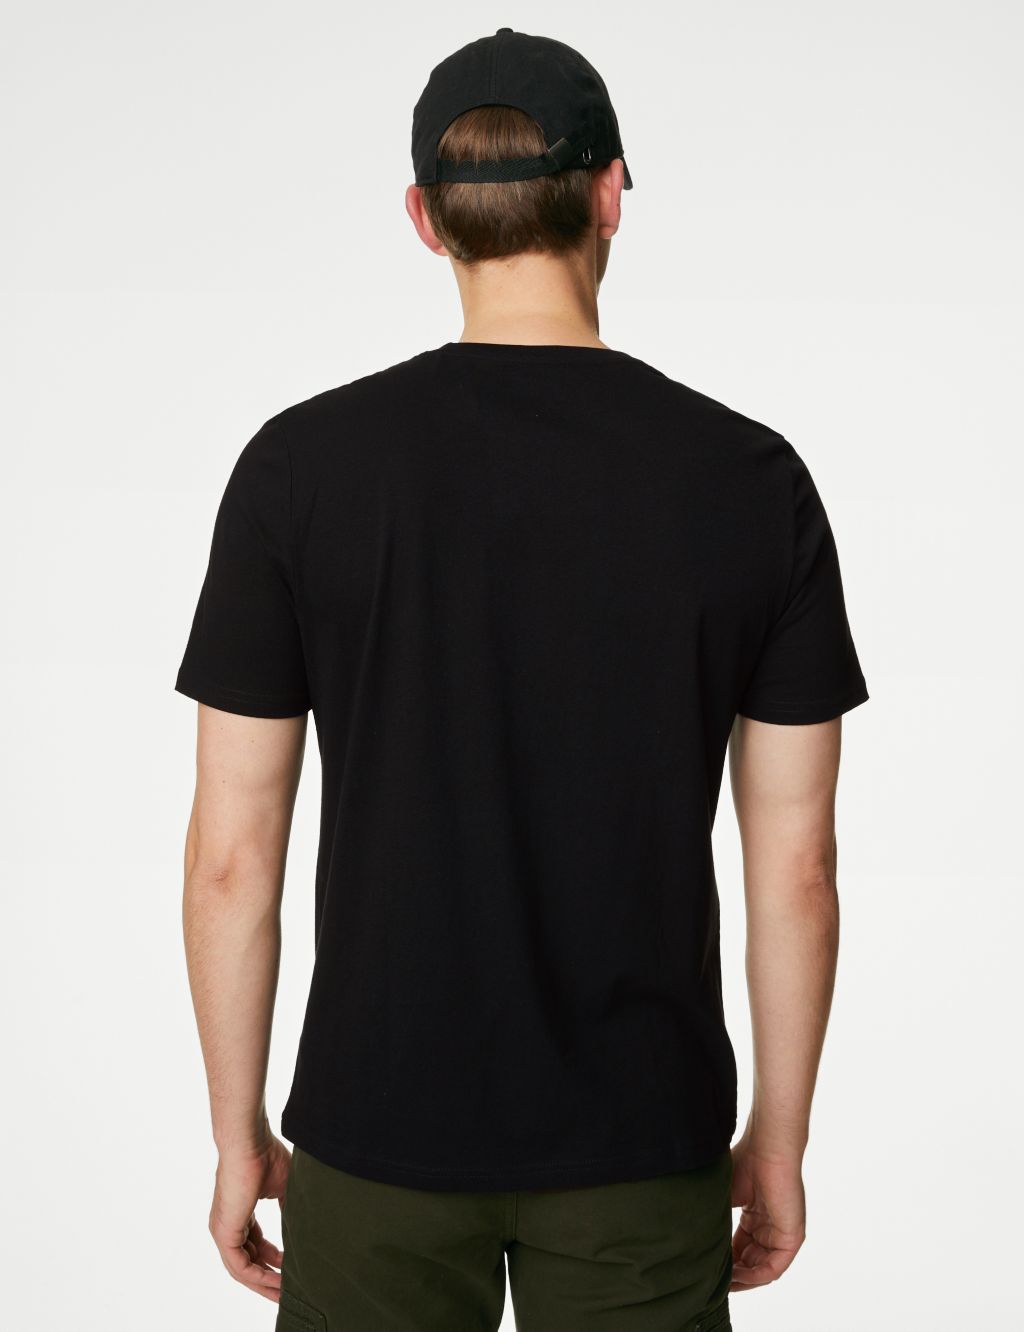 Regular Fit Pure Cotton Crew Neck T-Shirt | M&S Collection | M&S